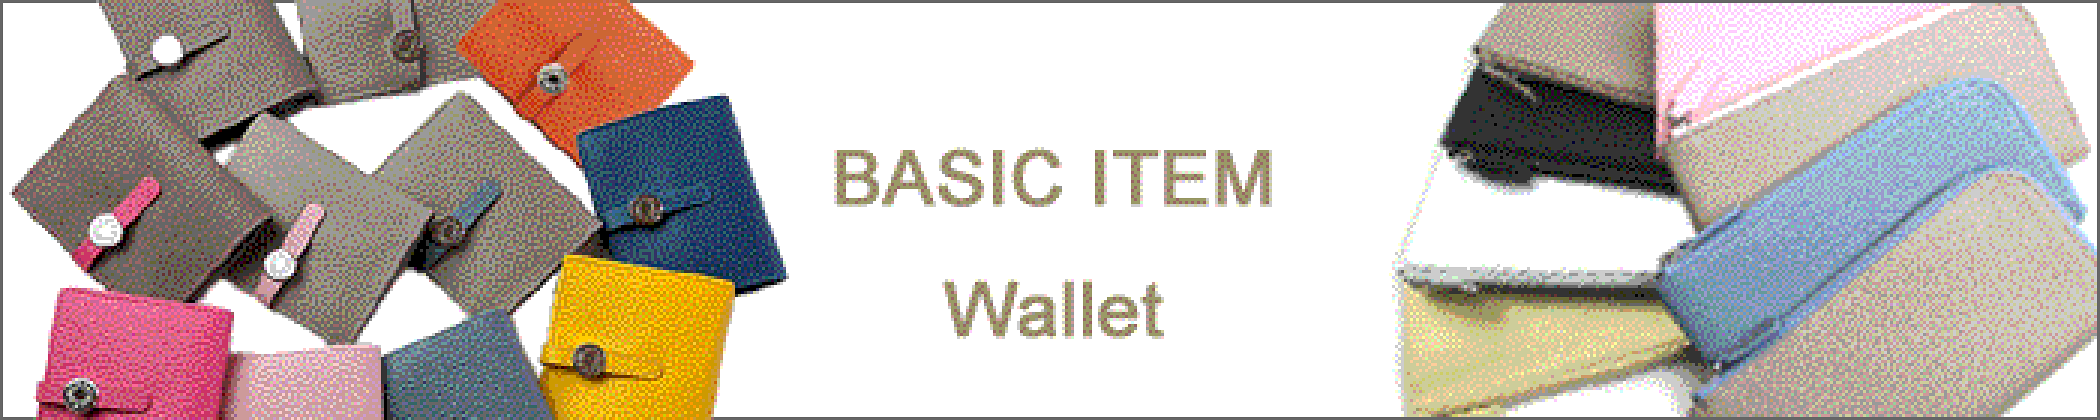 BASIC ITEM Wallet